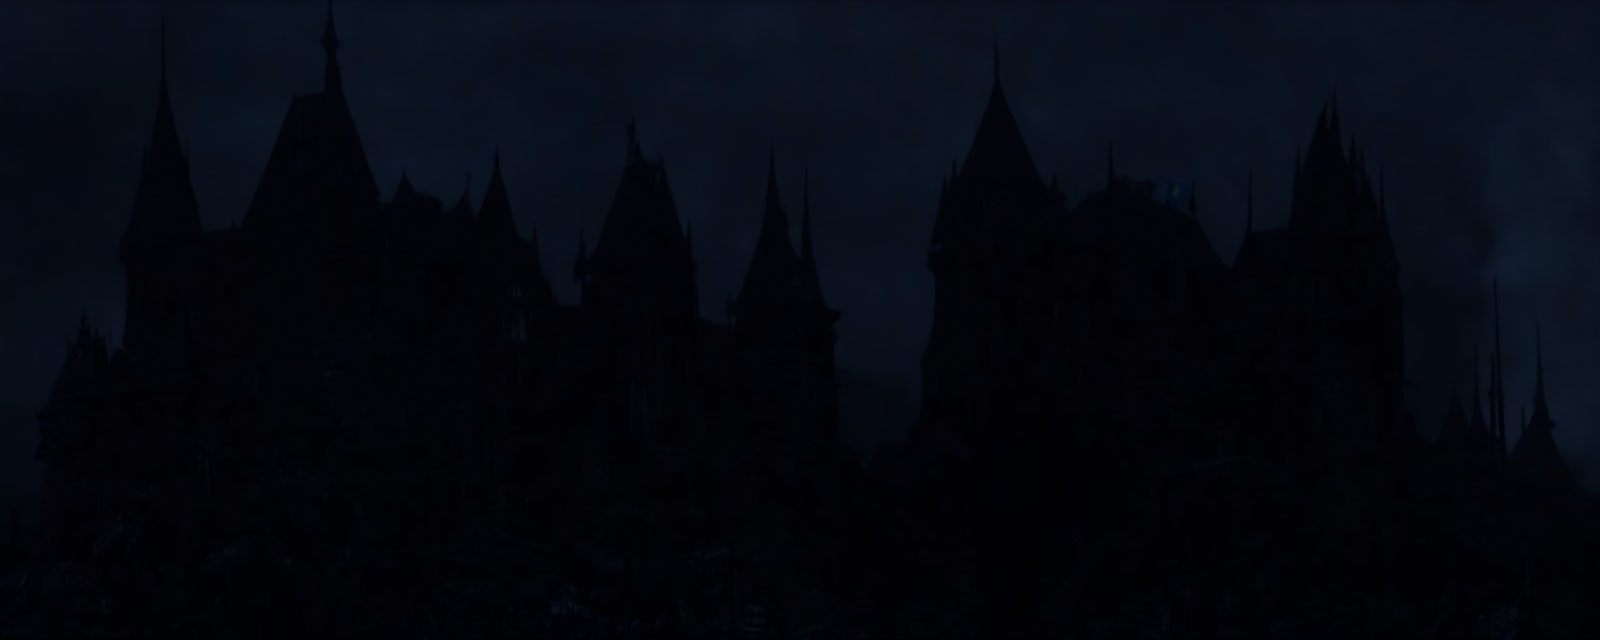 Gothic castle silhouette under gloomy sky